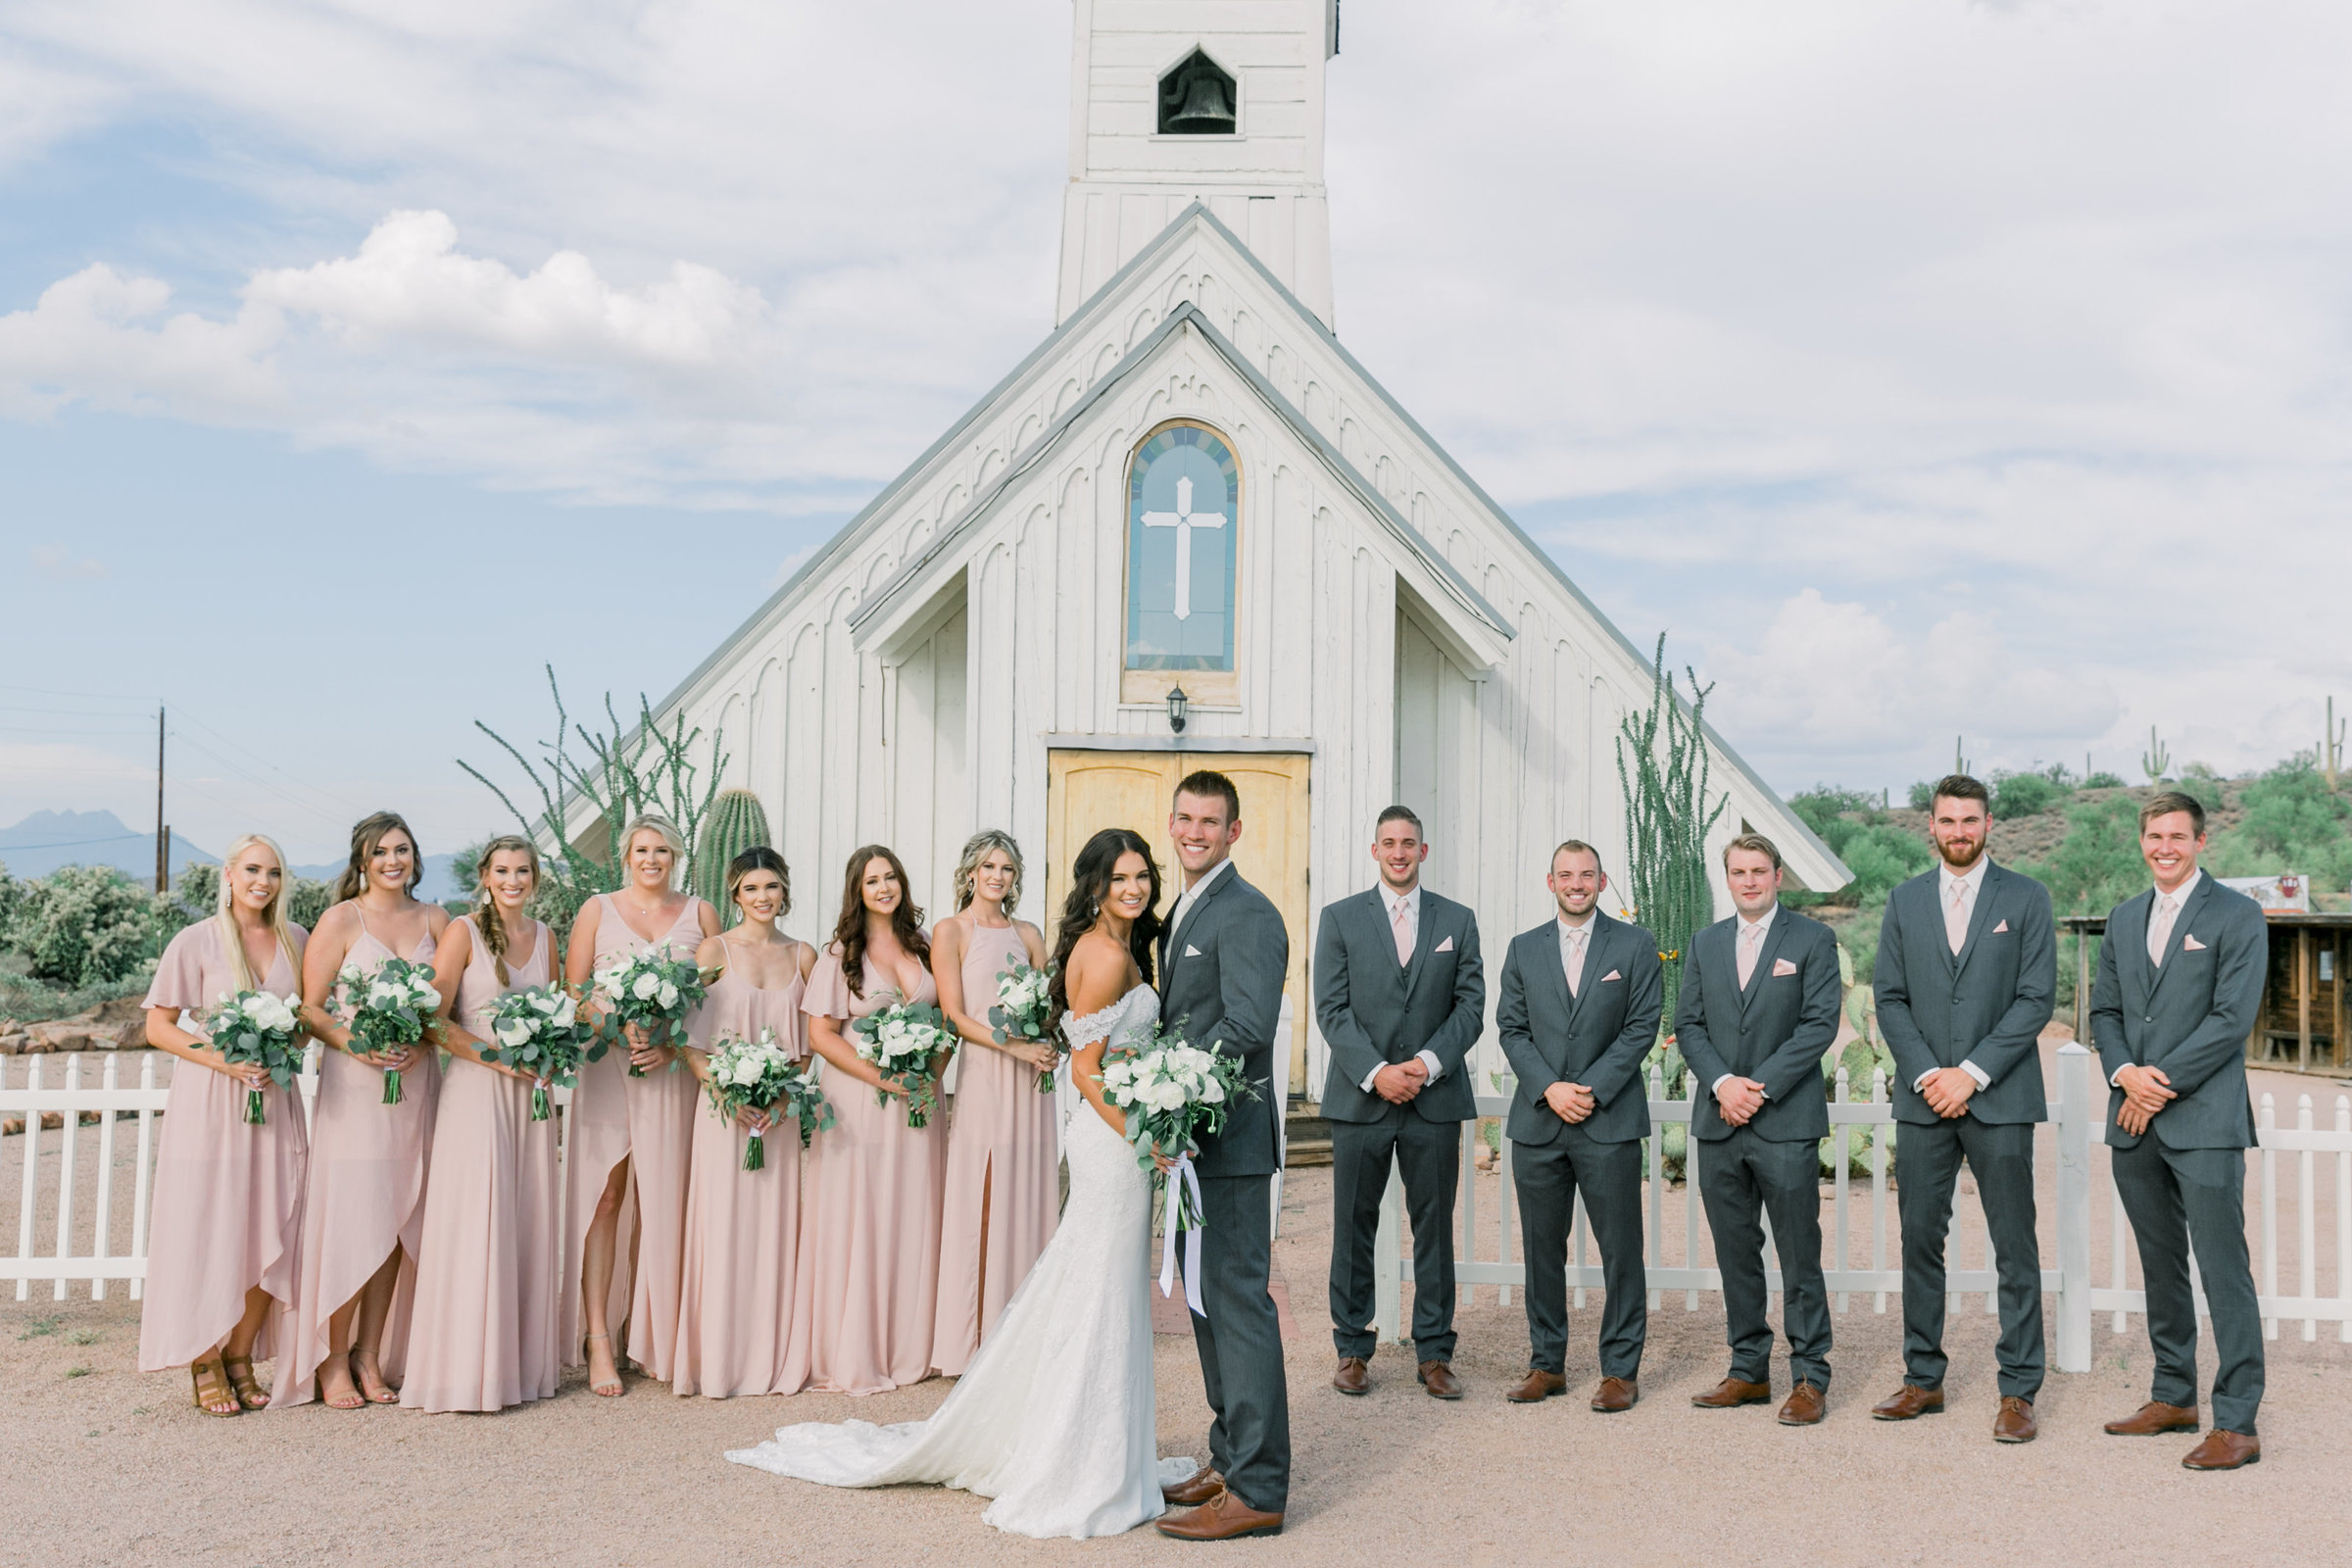 Karlie Colleen Photography - Arizona Wedding - The Paseo Venue - Jackie & Ryan -174